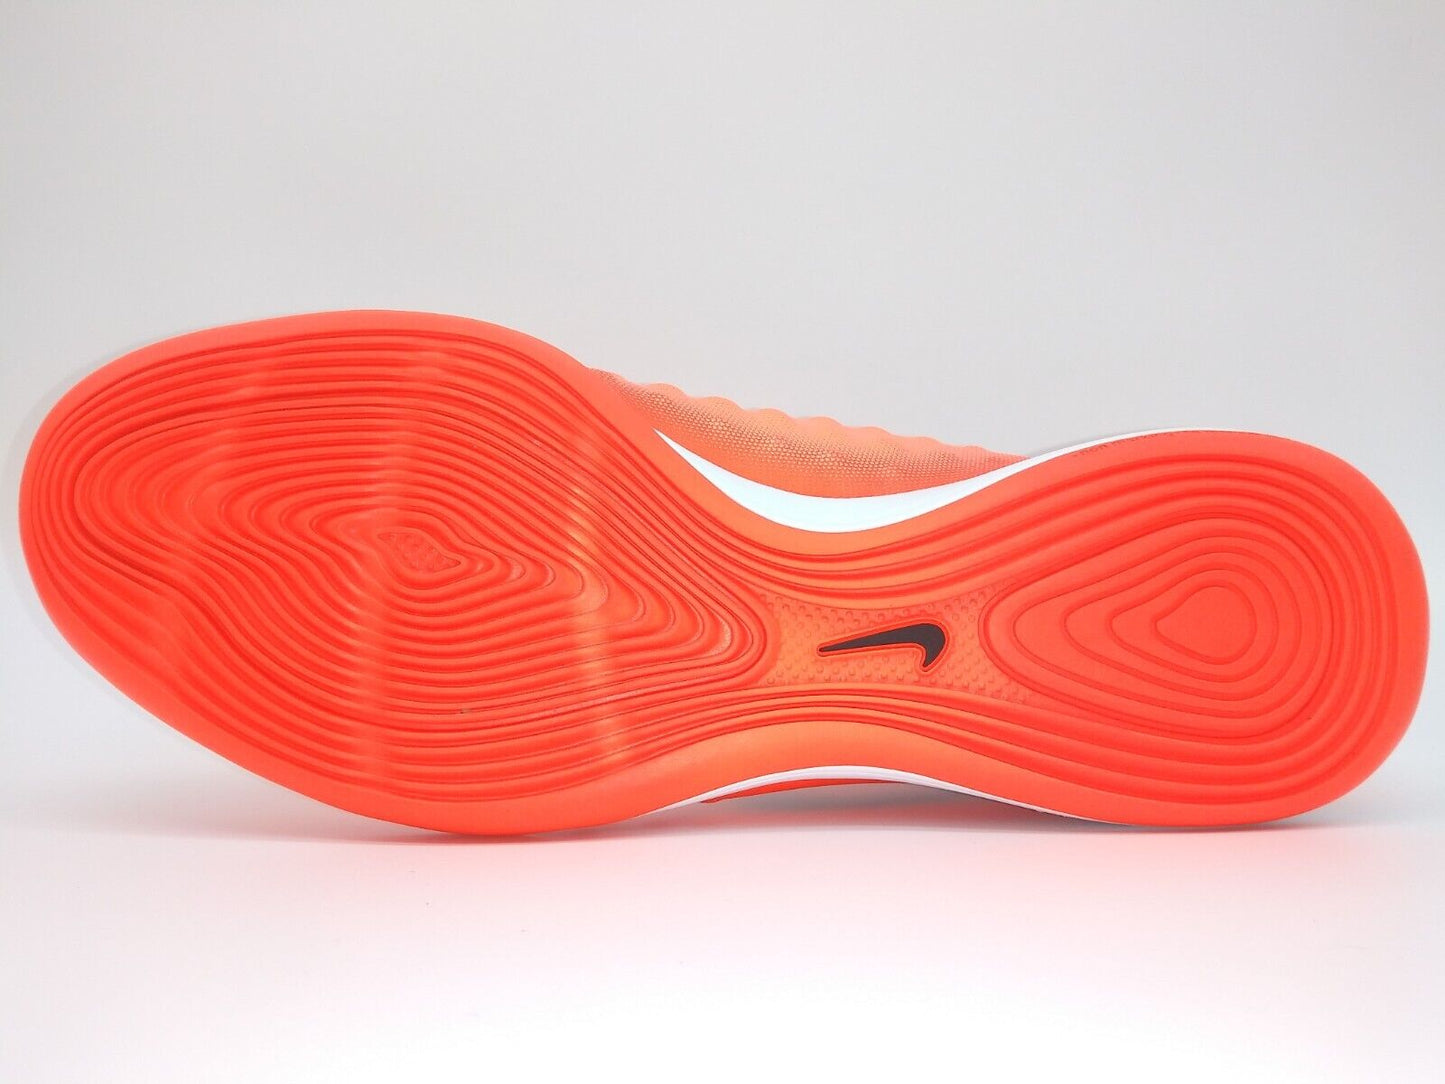 Nike Magistax Onda II IC Orange